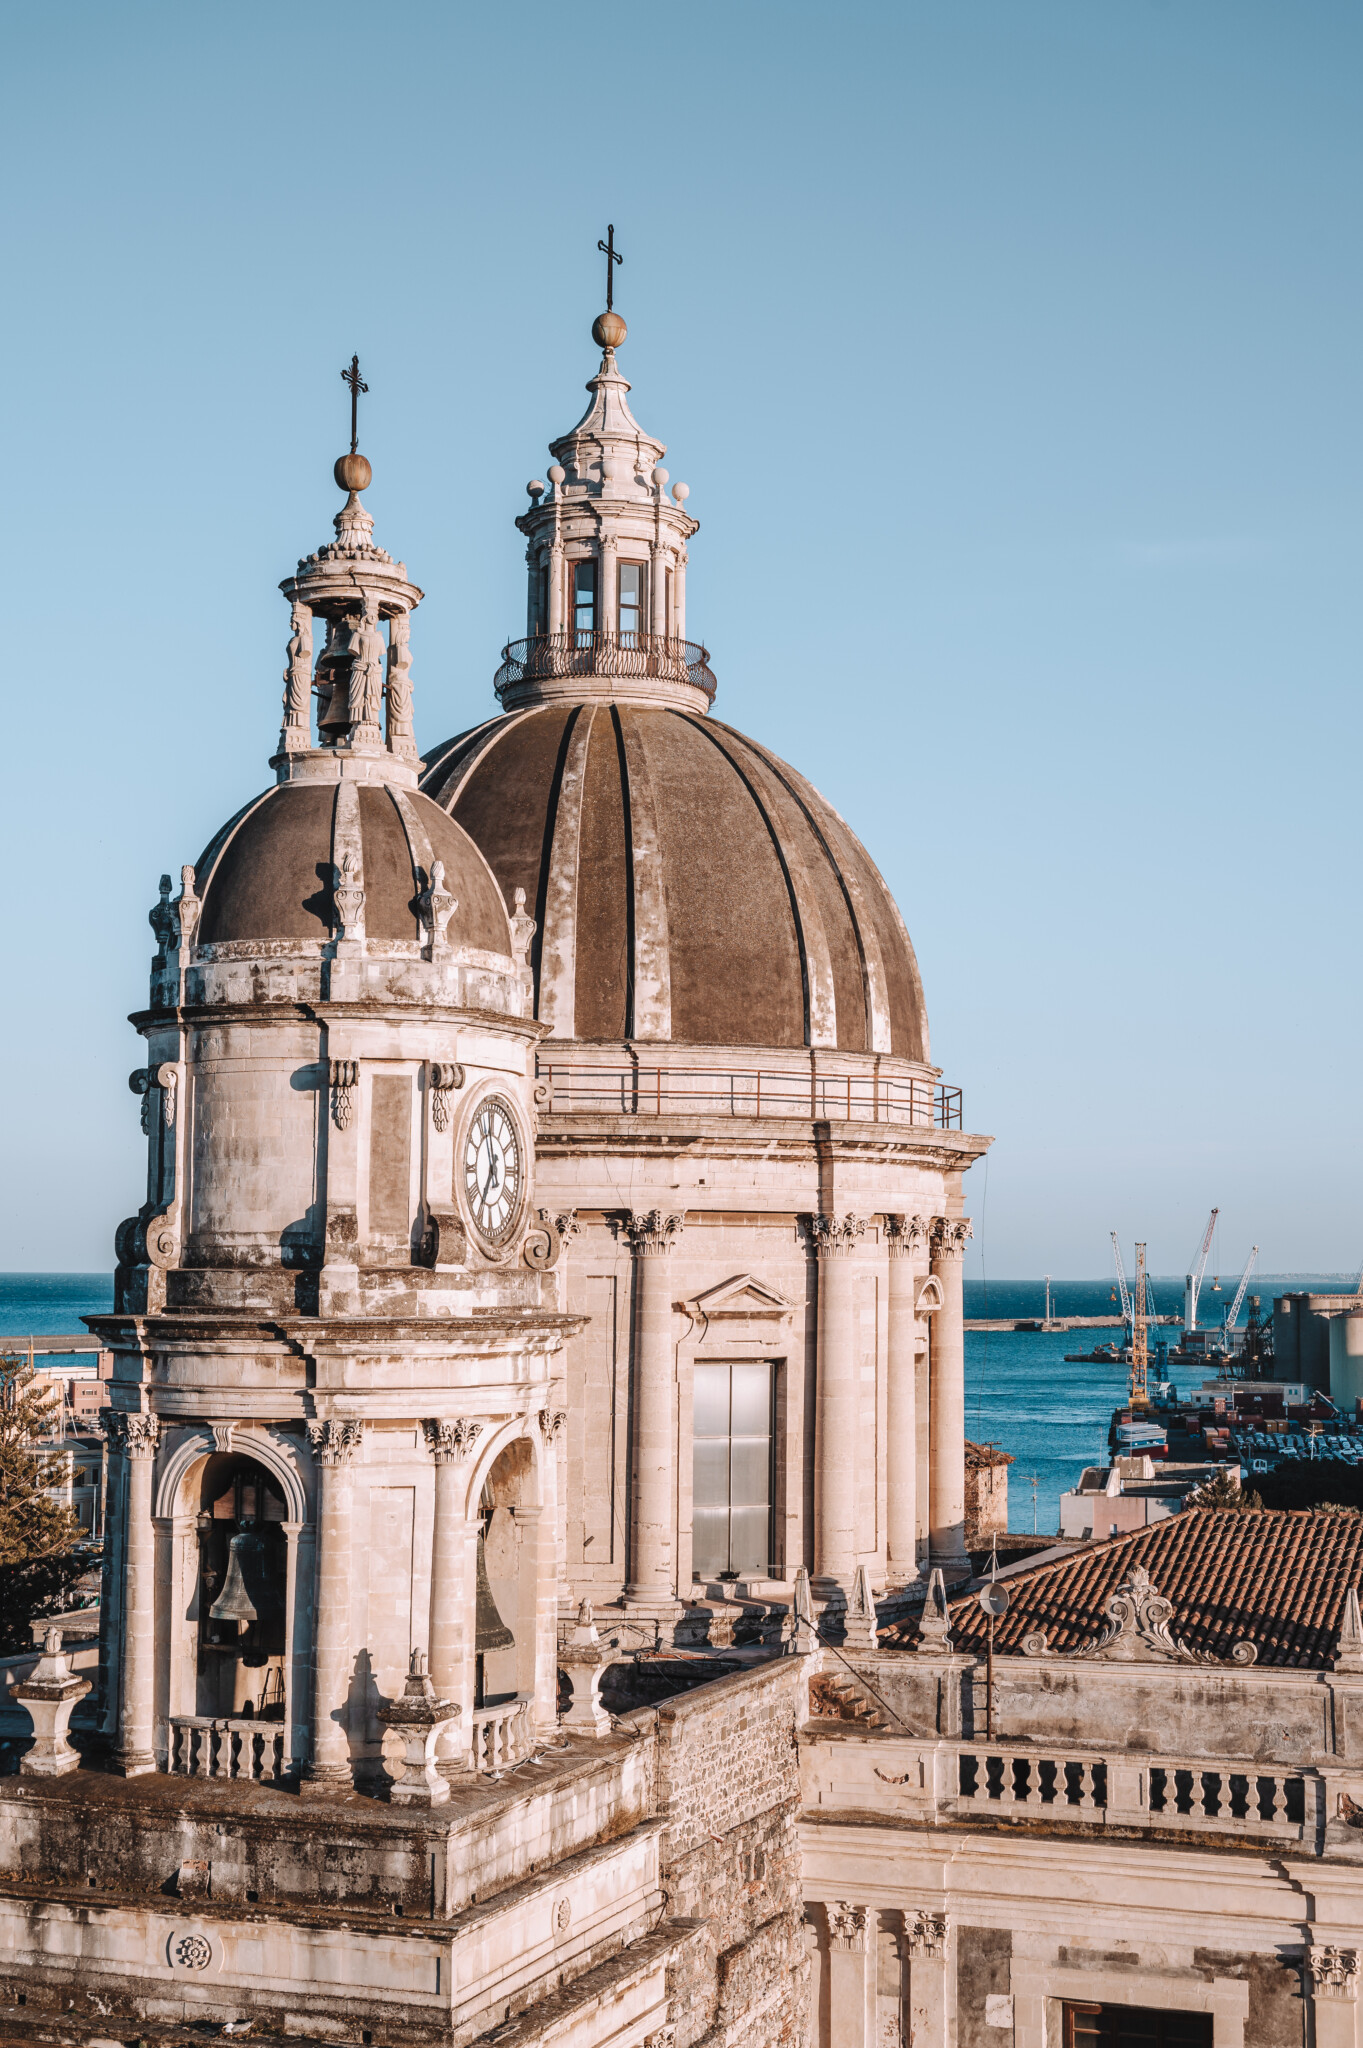 Die Kuppel der Kathedrale Catanias